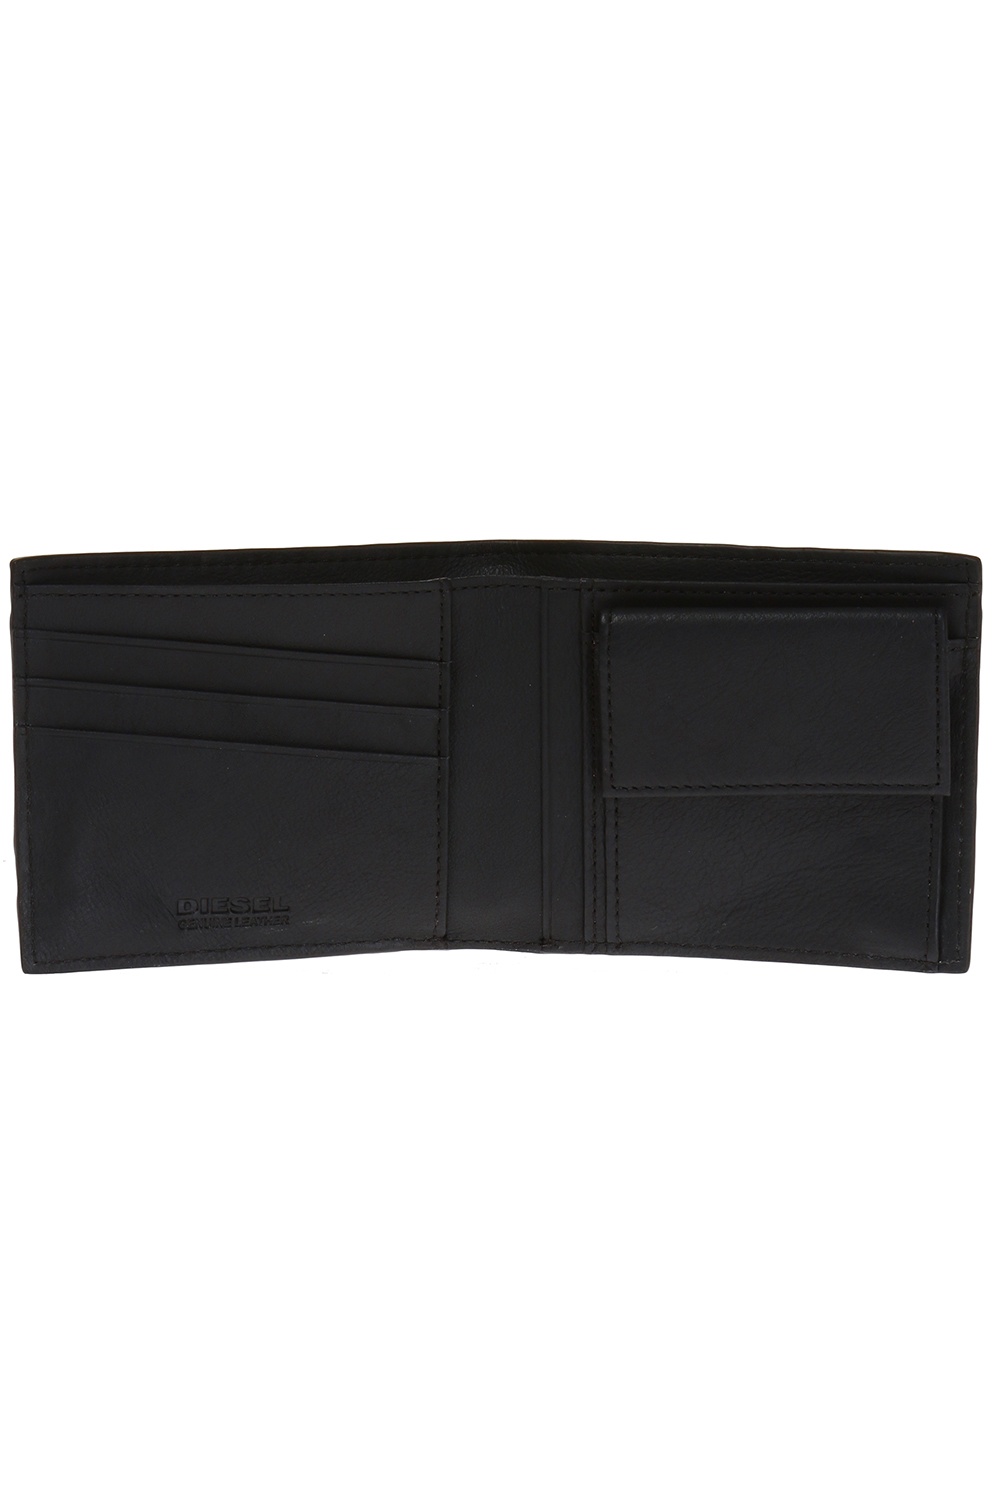 'Hiresh S' bi-fold wallet Diesel - Vitkac Sweden